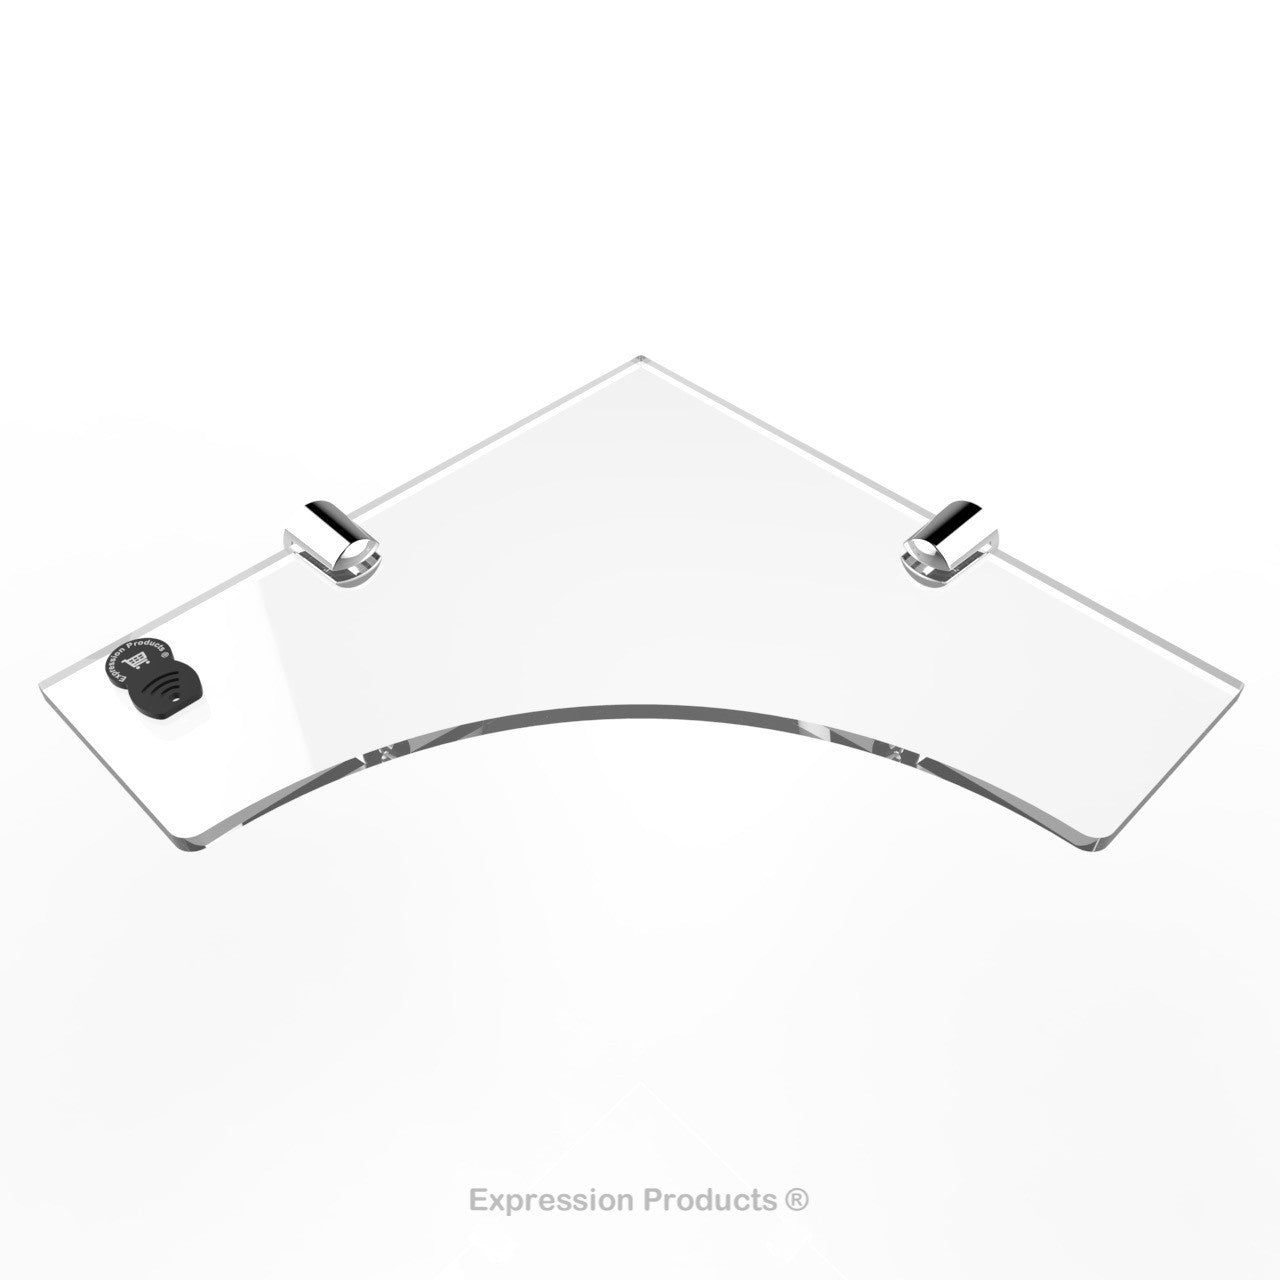 Corner Acrylic Shelf - Style 004 - Expression Products Ltd